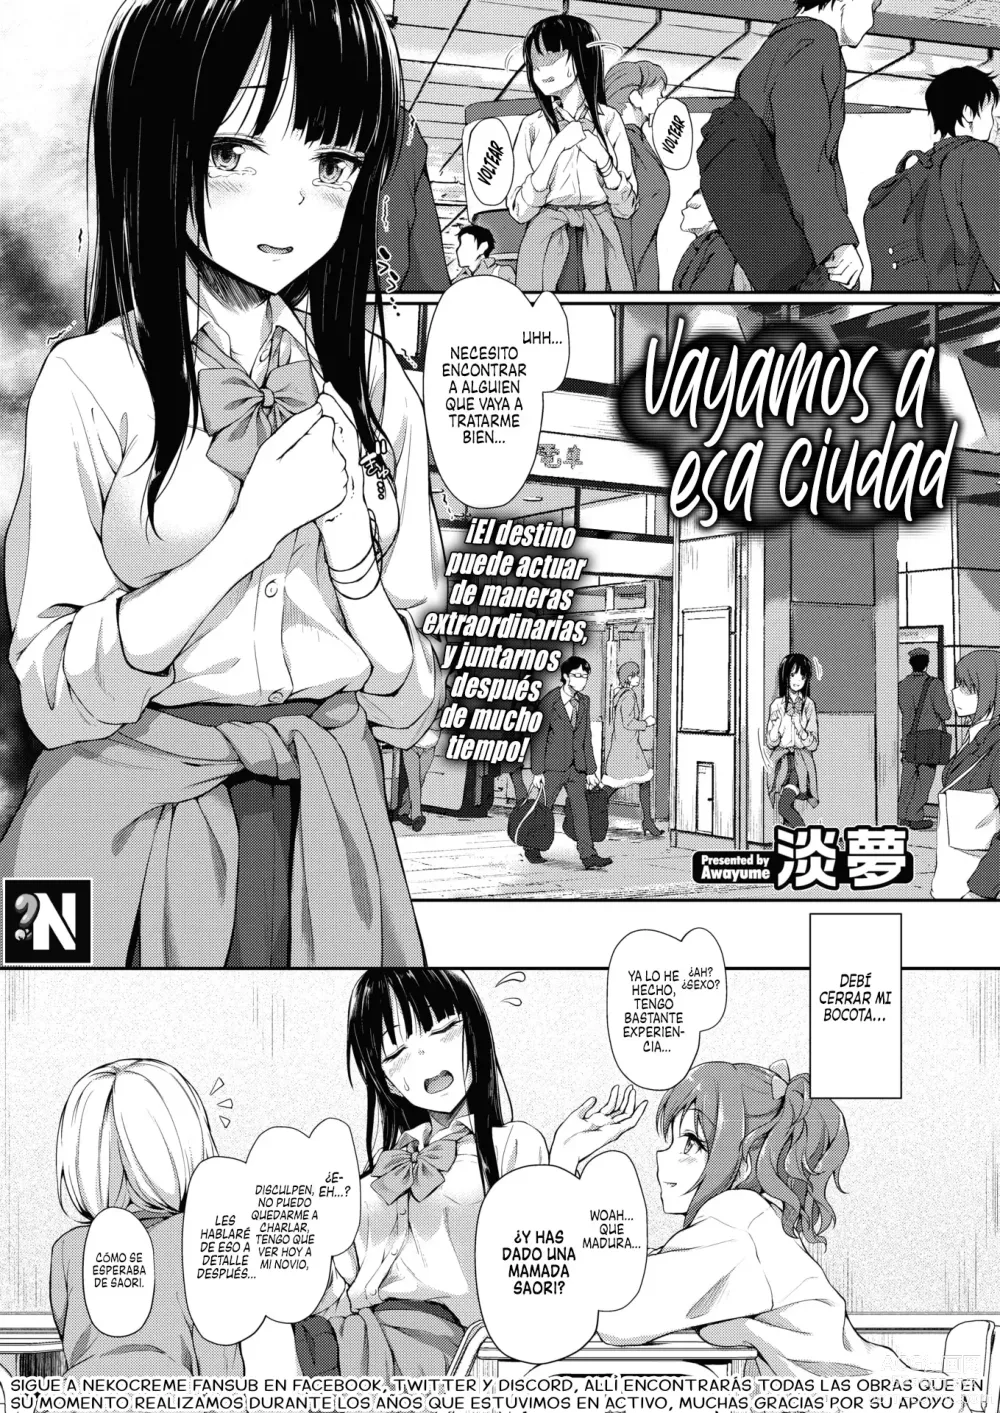 Page 1 of manga Vayamos a esa Ciudad